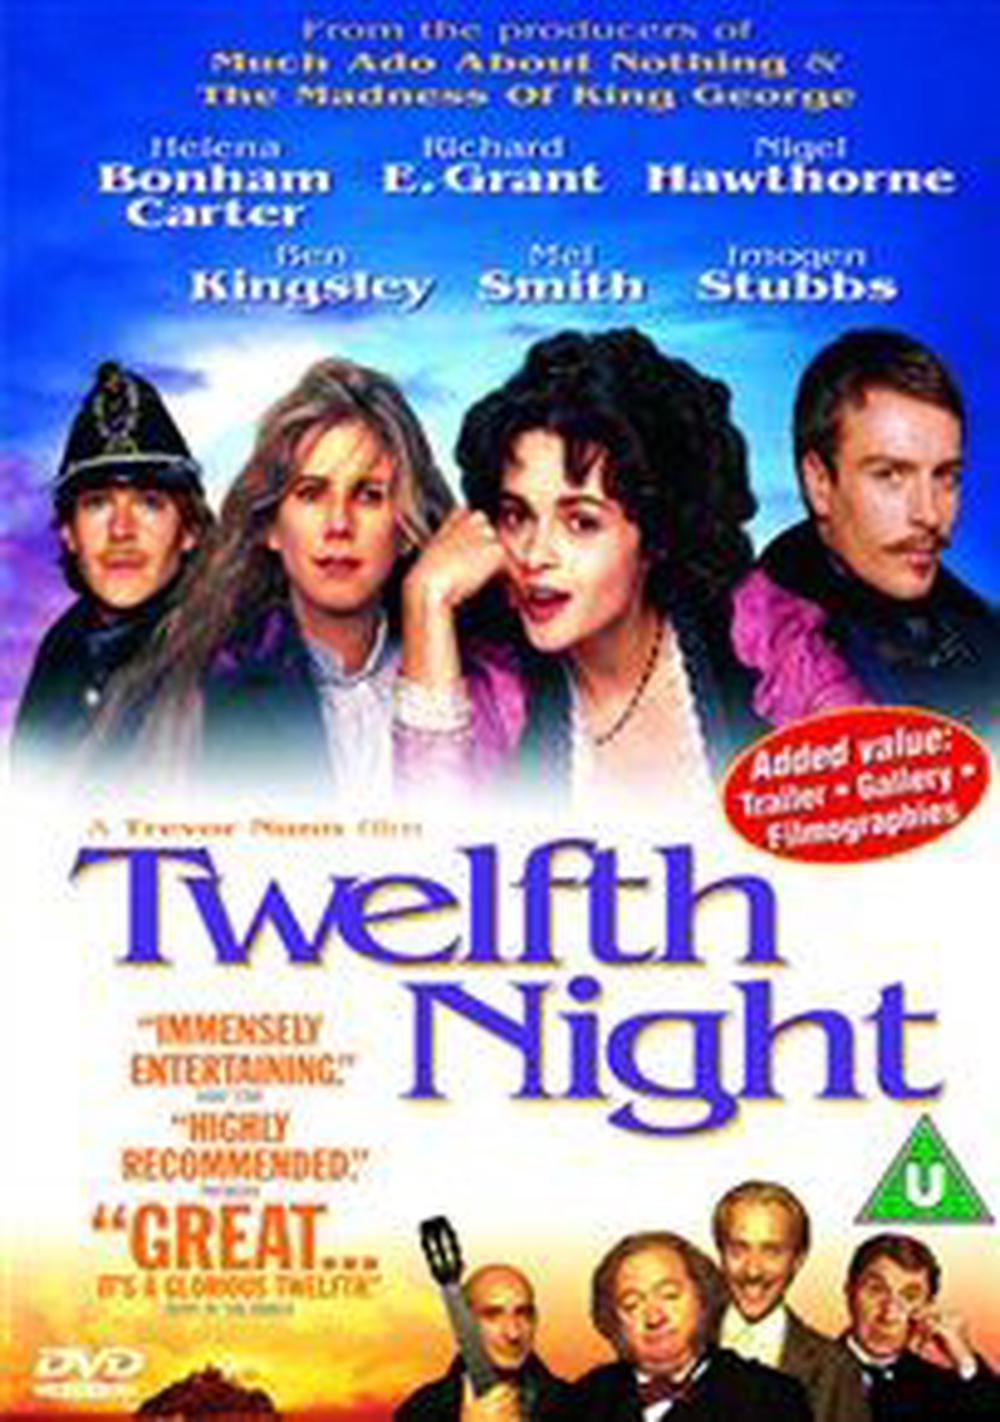 Twelfth Night - DVD Region 2 Free Shipping! 5017239191213 | eBay